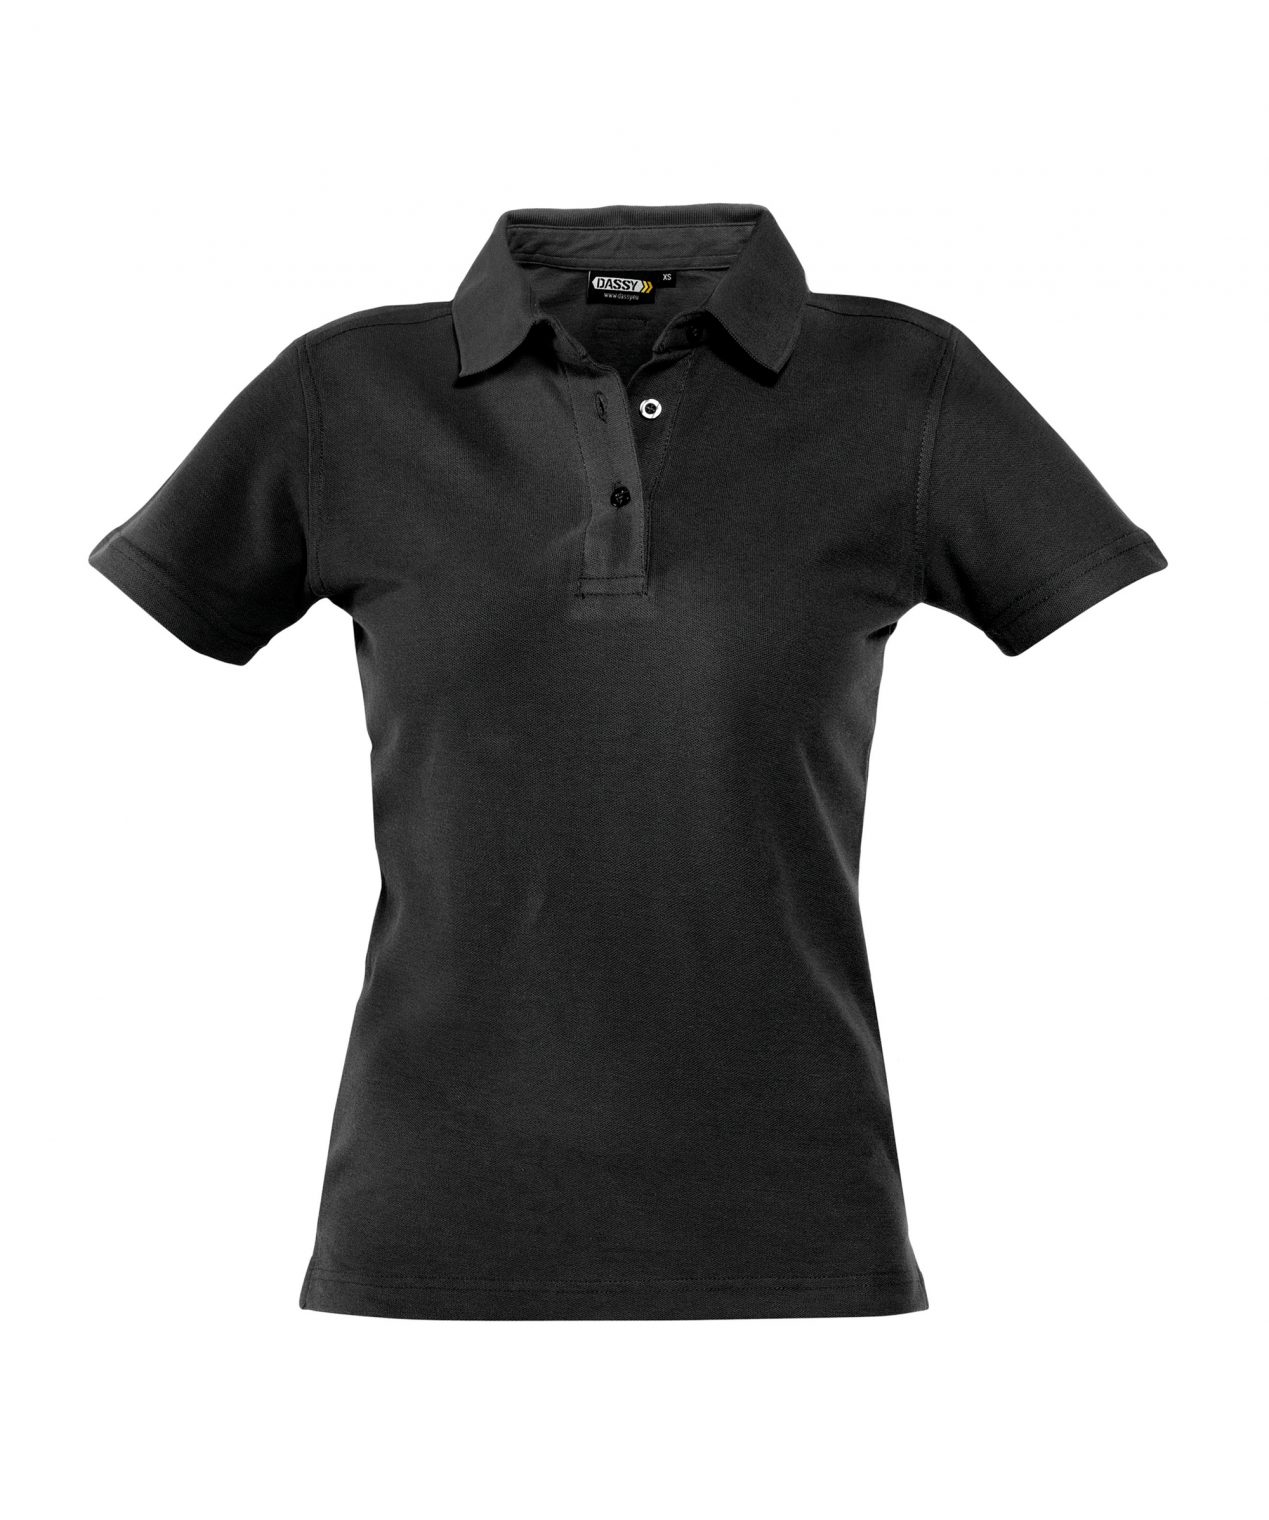 leon women polo shirt black front